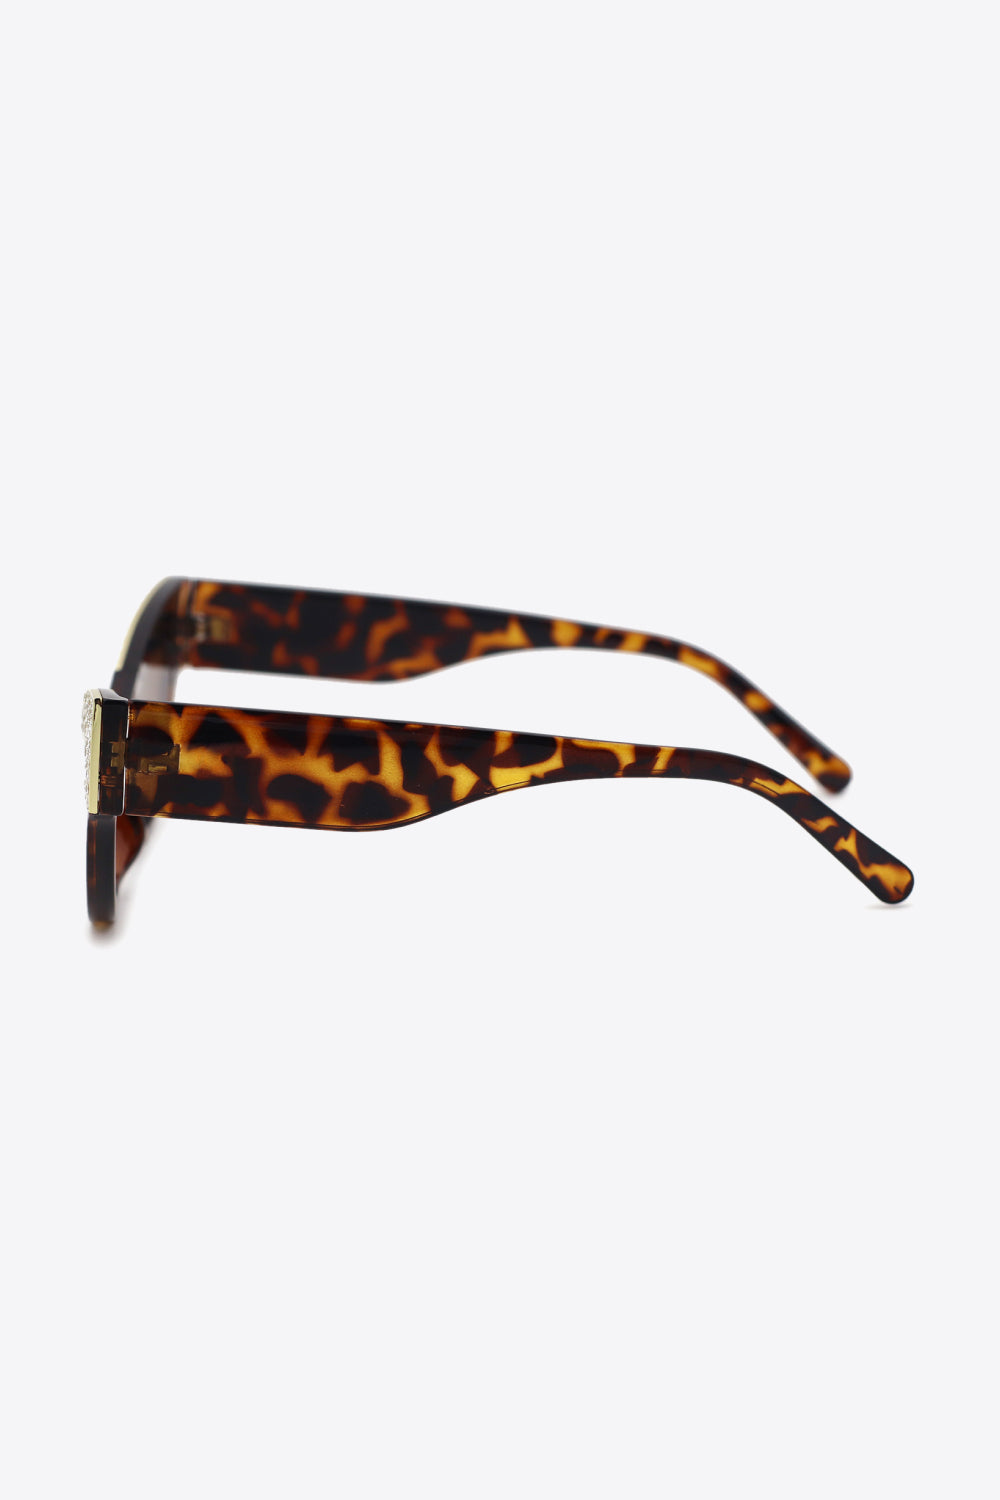 Uylee's Boutique UV400 Rhinestone Trim Cat-Eye Sunglasses